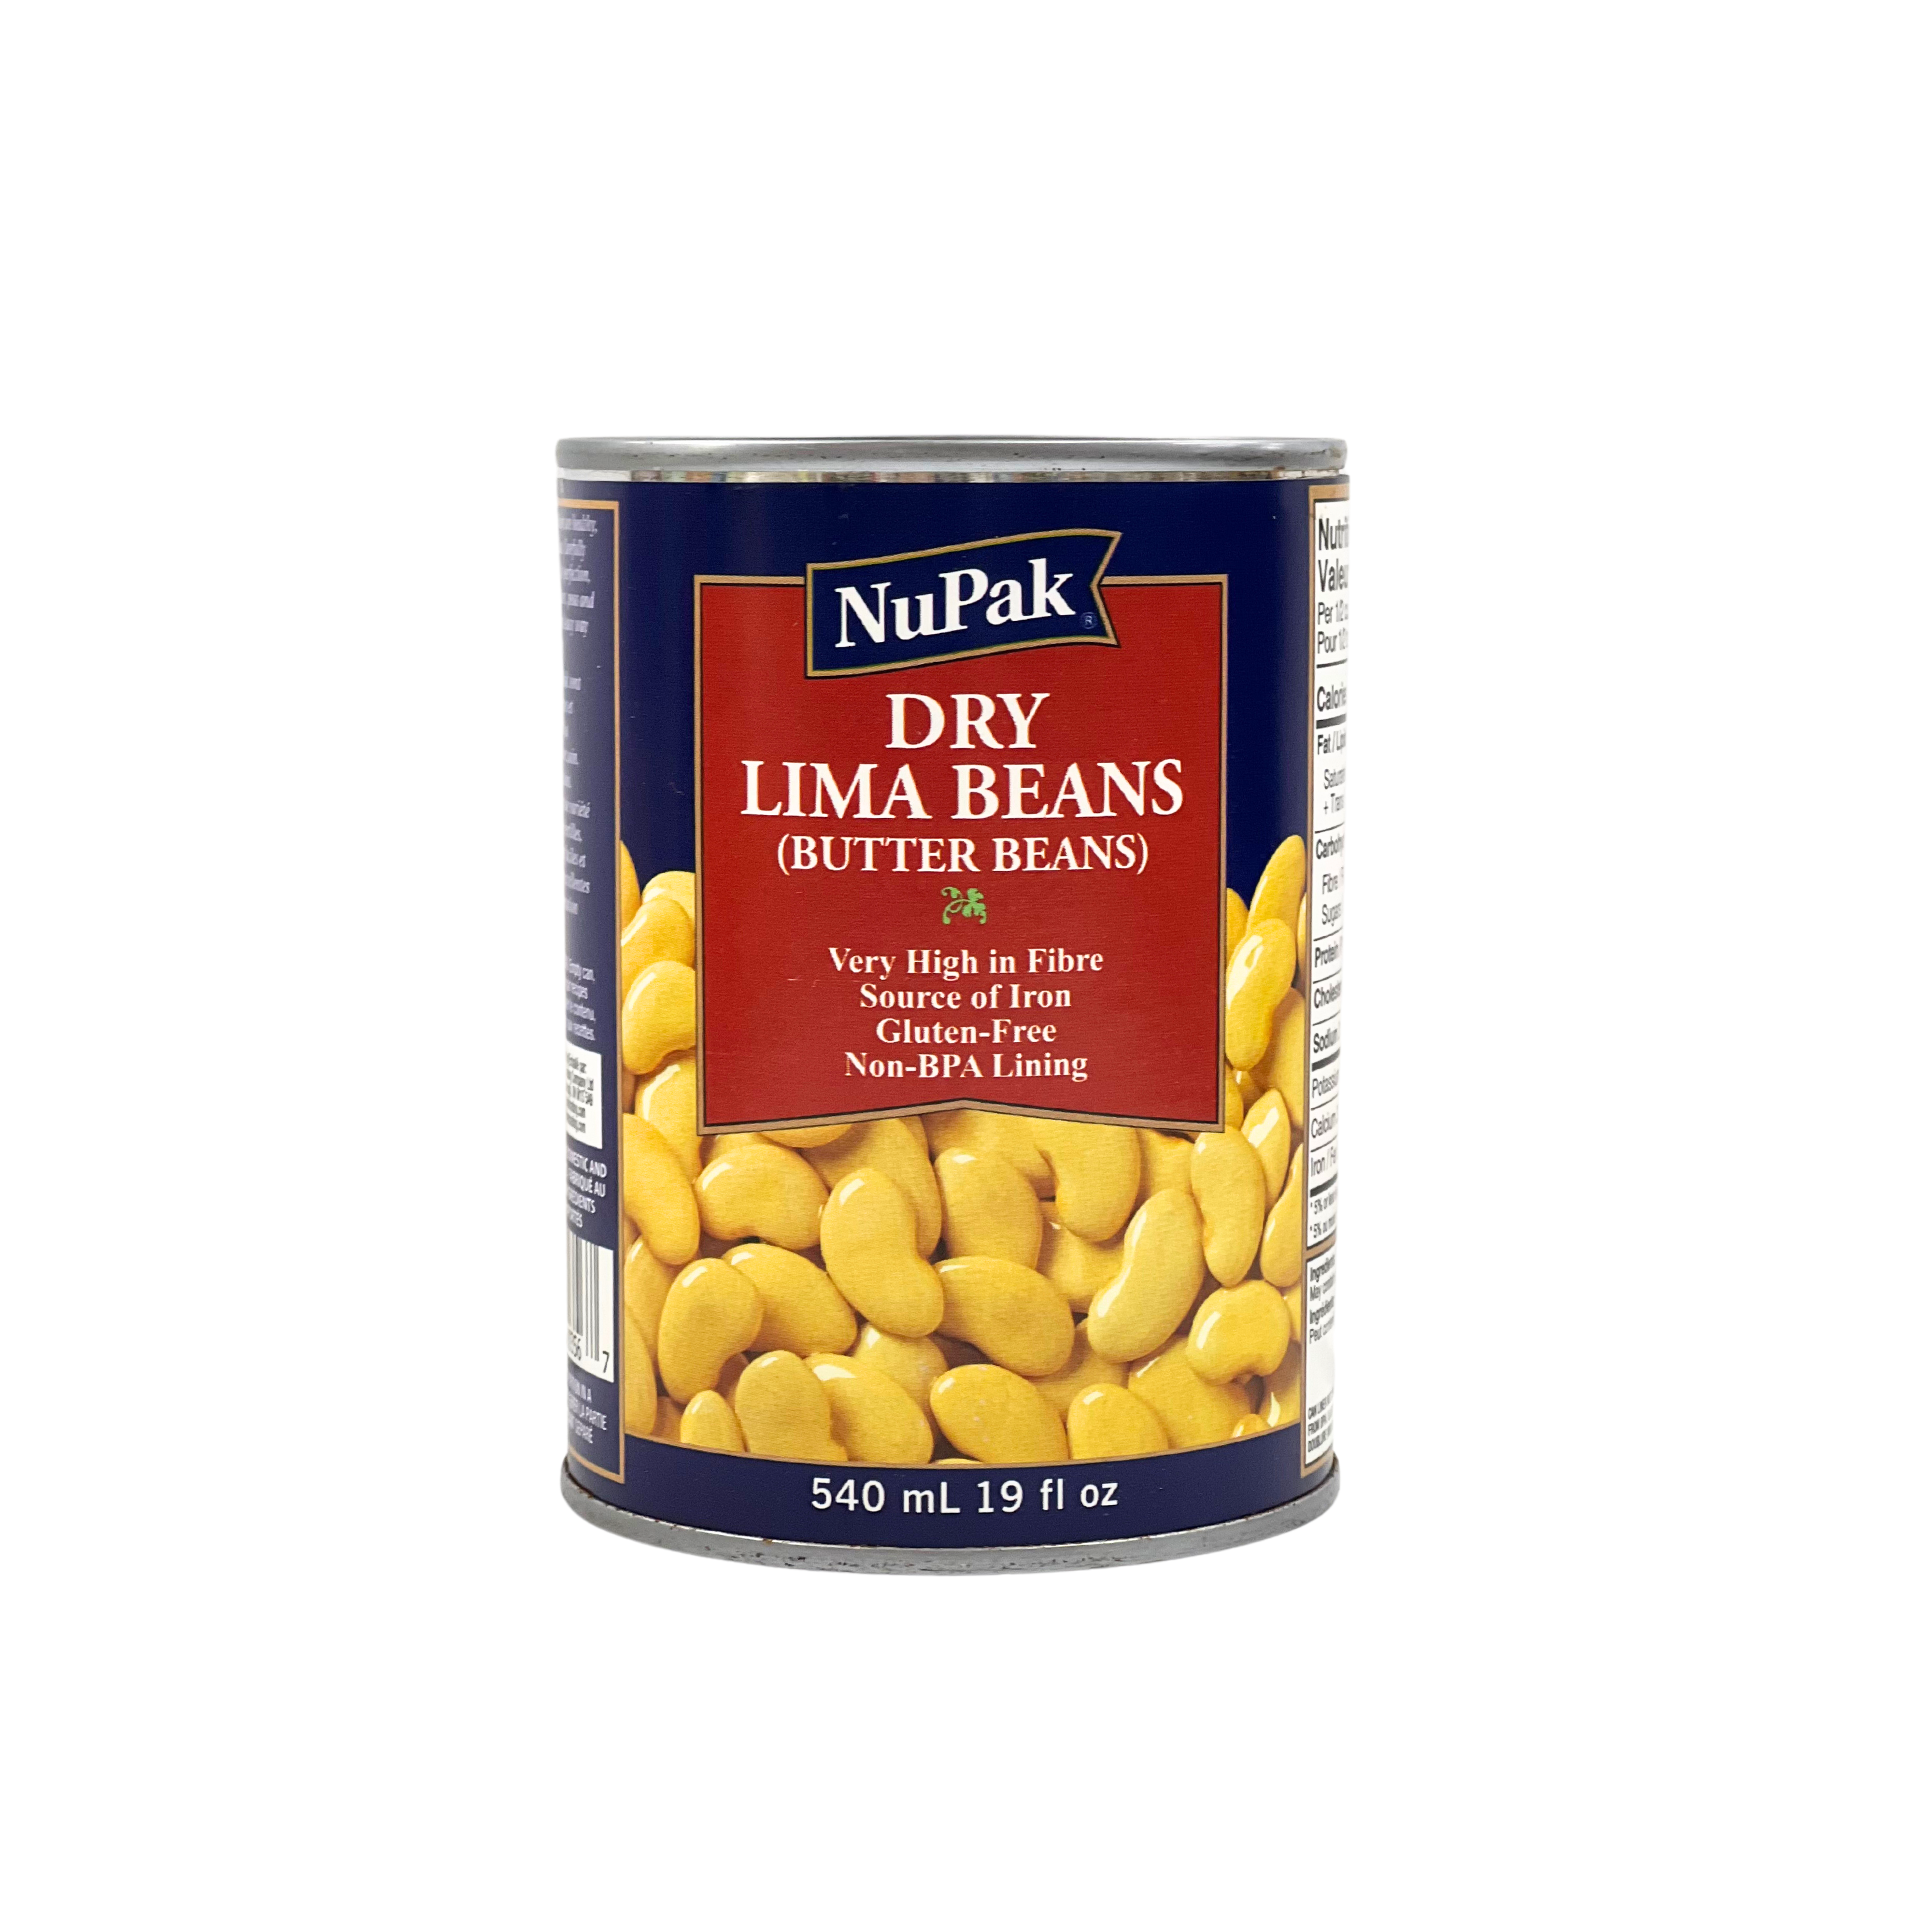 Nupak Dry Lima Beans 540ml